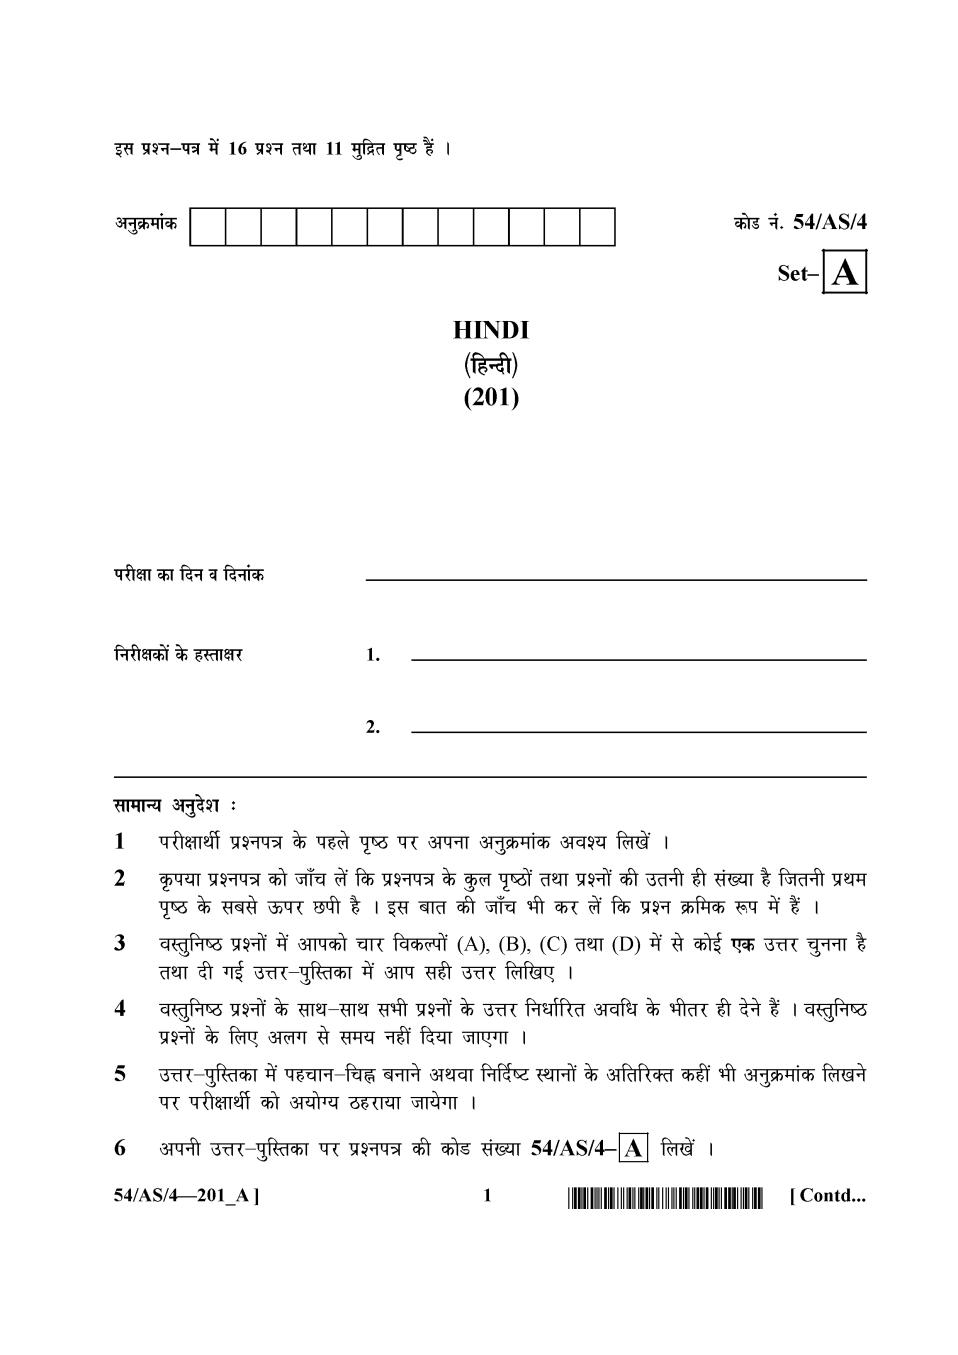 NIOS Class 10 Question Paper Apr 2017 - Hindi - Page 1